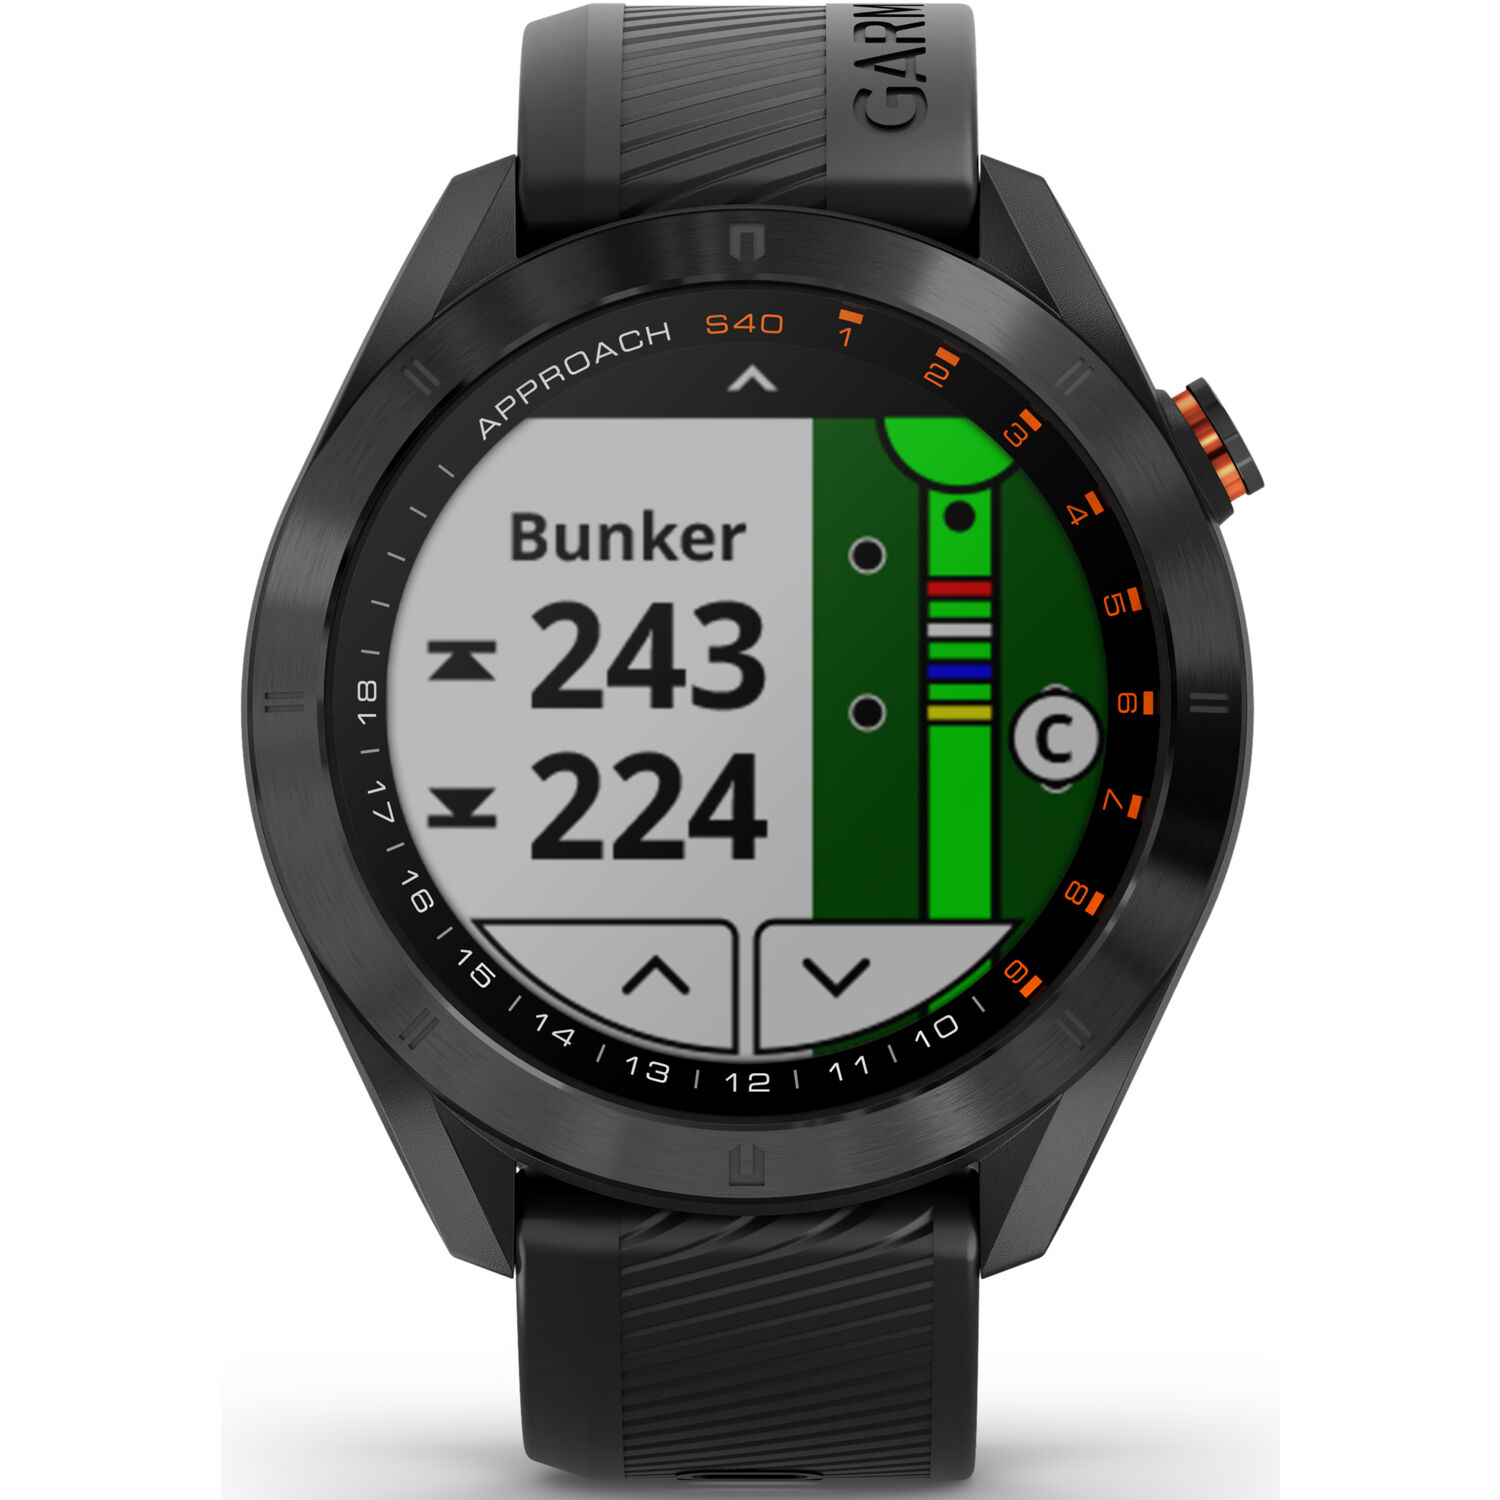 Garmin Approach S40 GPS Golf Smartwatch in Black - image 1 of 8